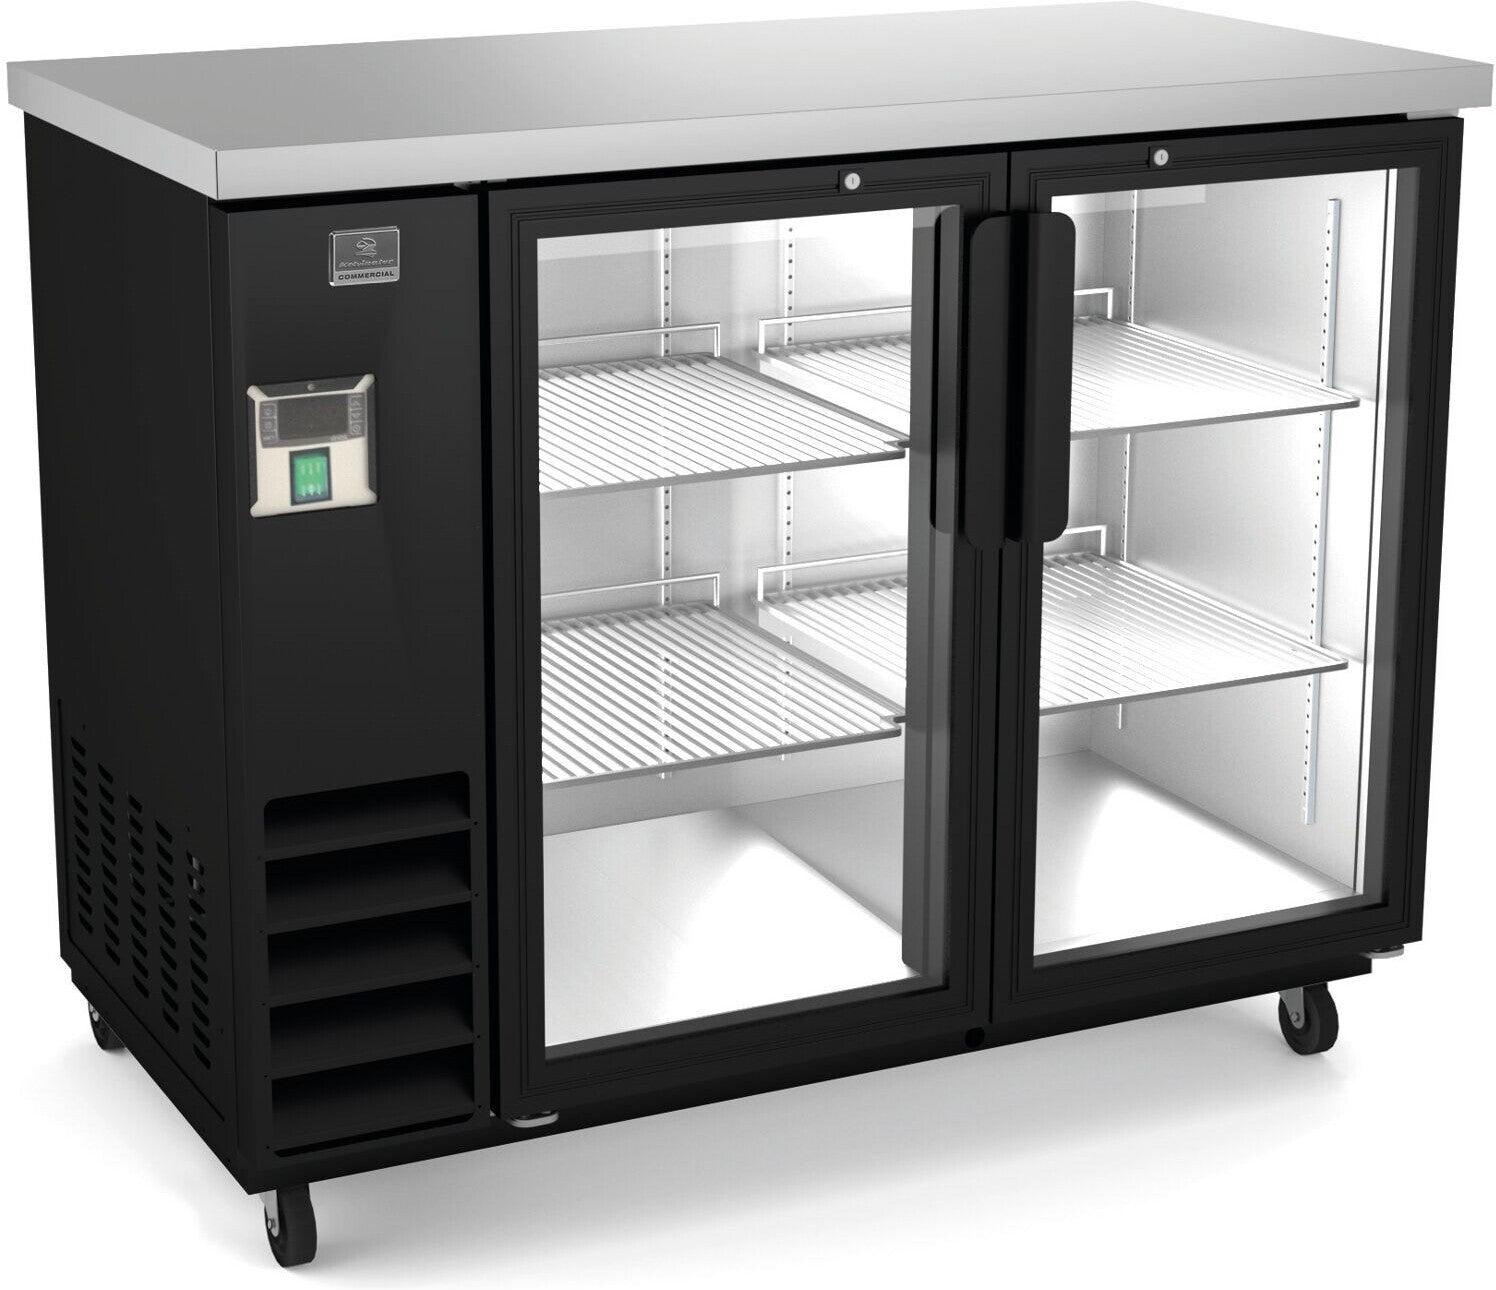 Kelvinator Commercial - 48" Back Bar Refrigerator with 2 Glass Doors - KCHBB48G